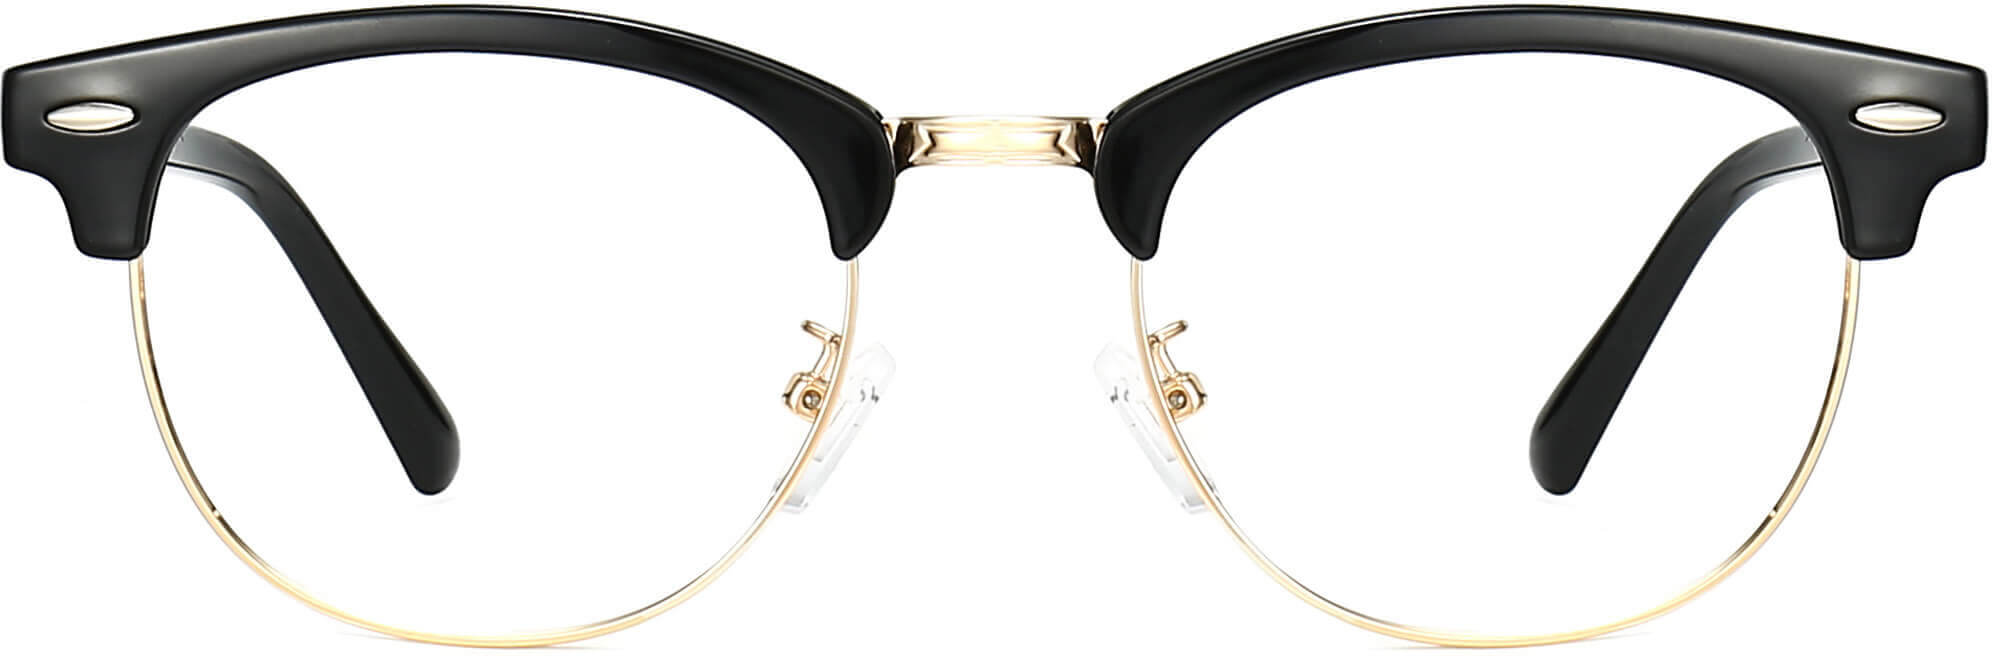 Nicolas Browline Black Eyeglasses from ANRRI, front view